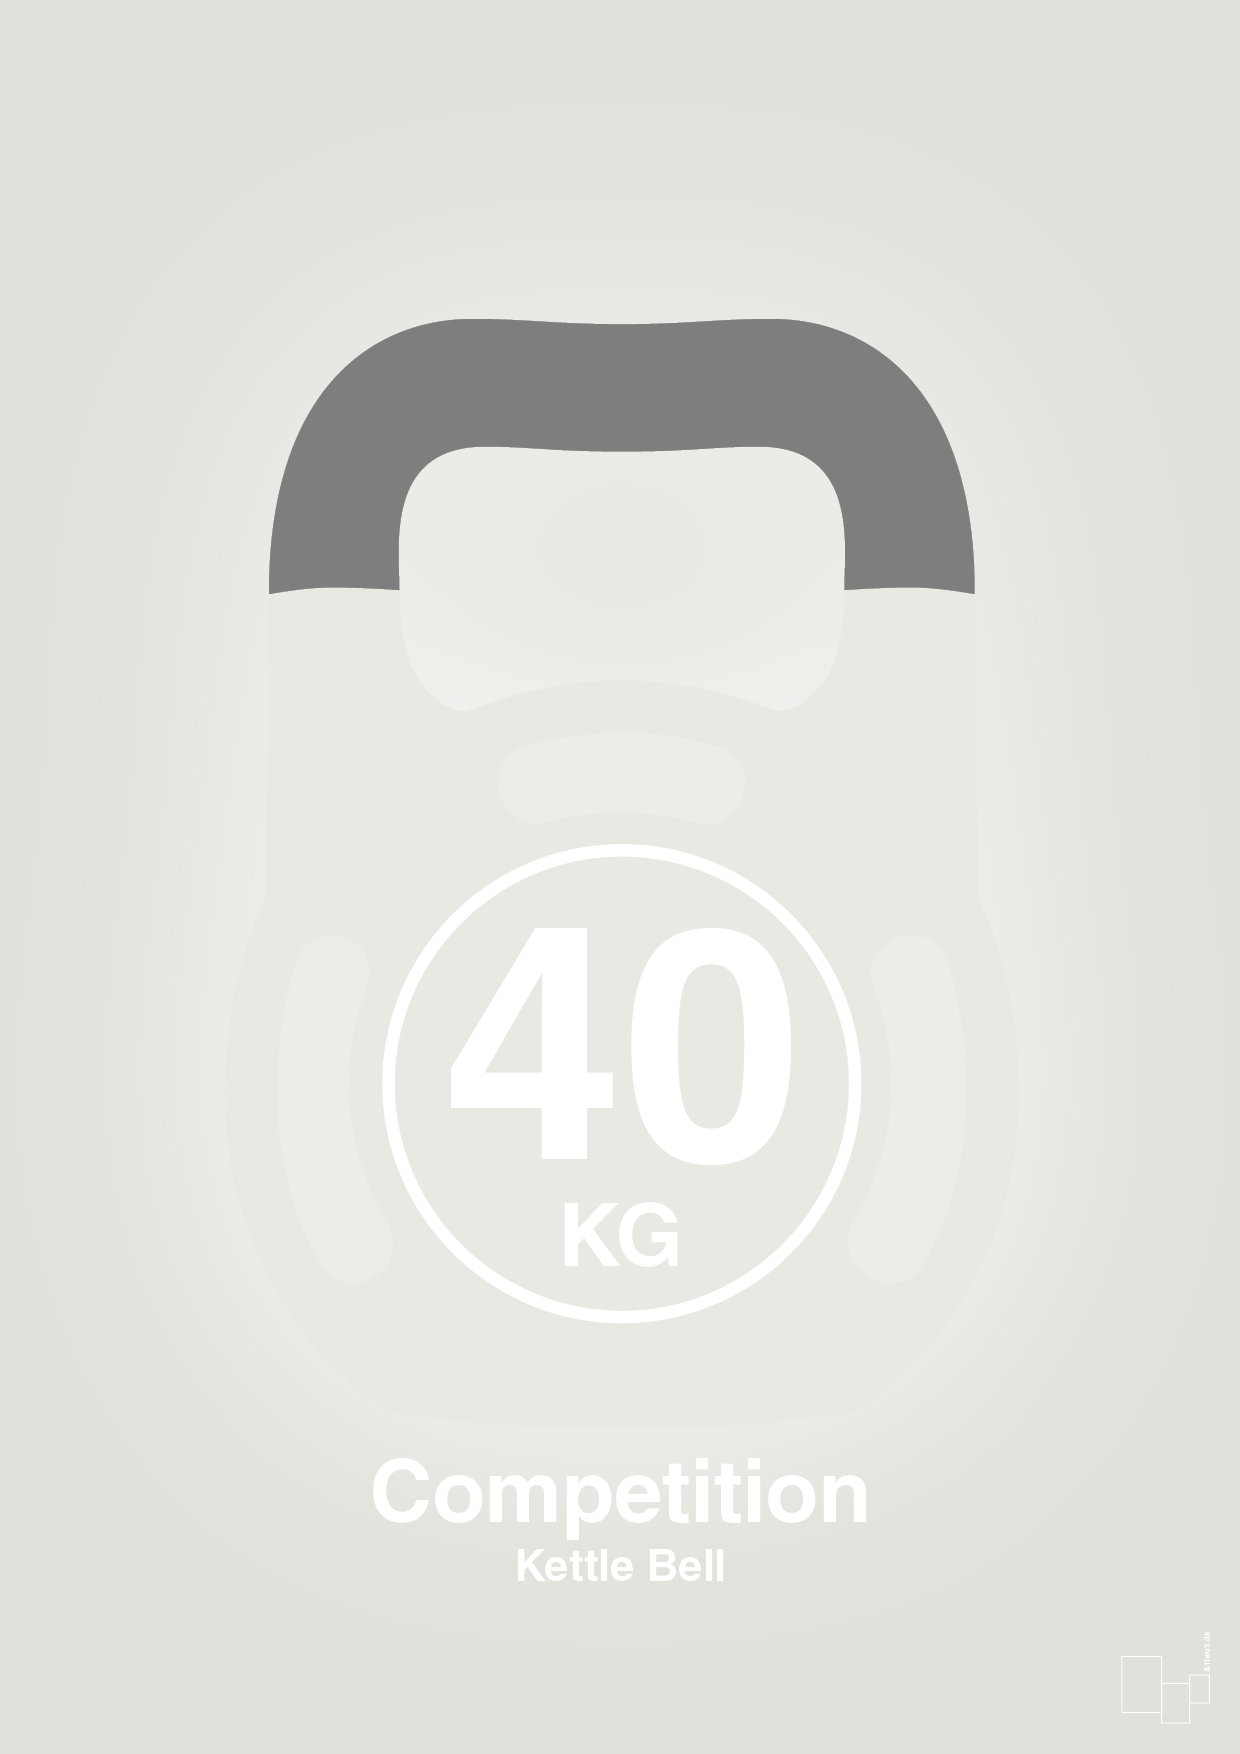 kettle bell 40 kg - competition color - Plakat med Grafik i Painters White